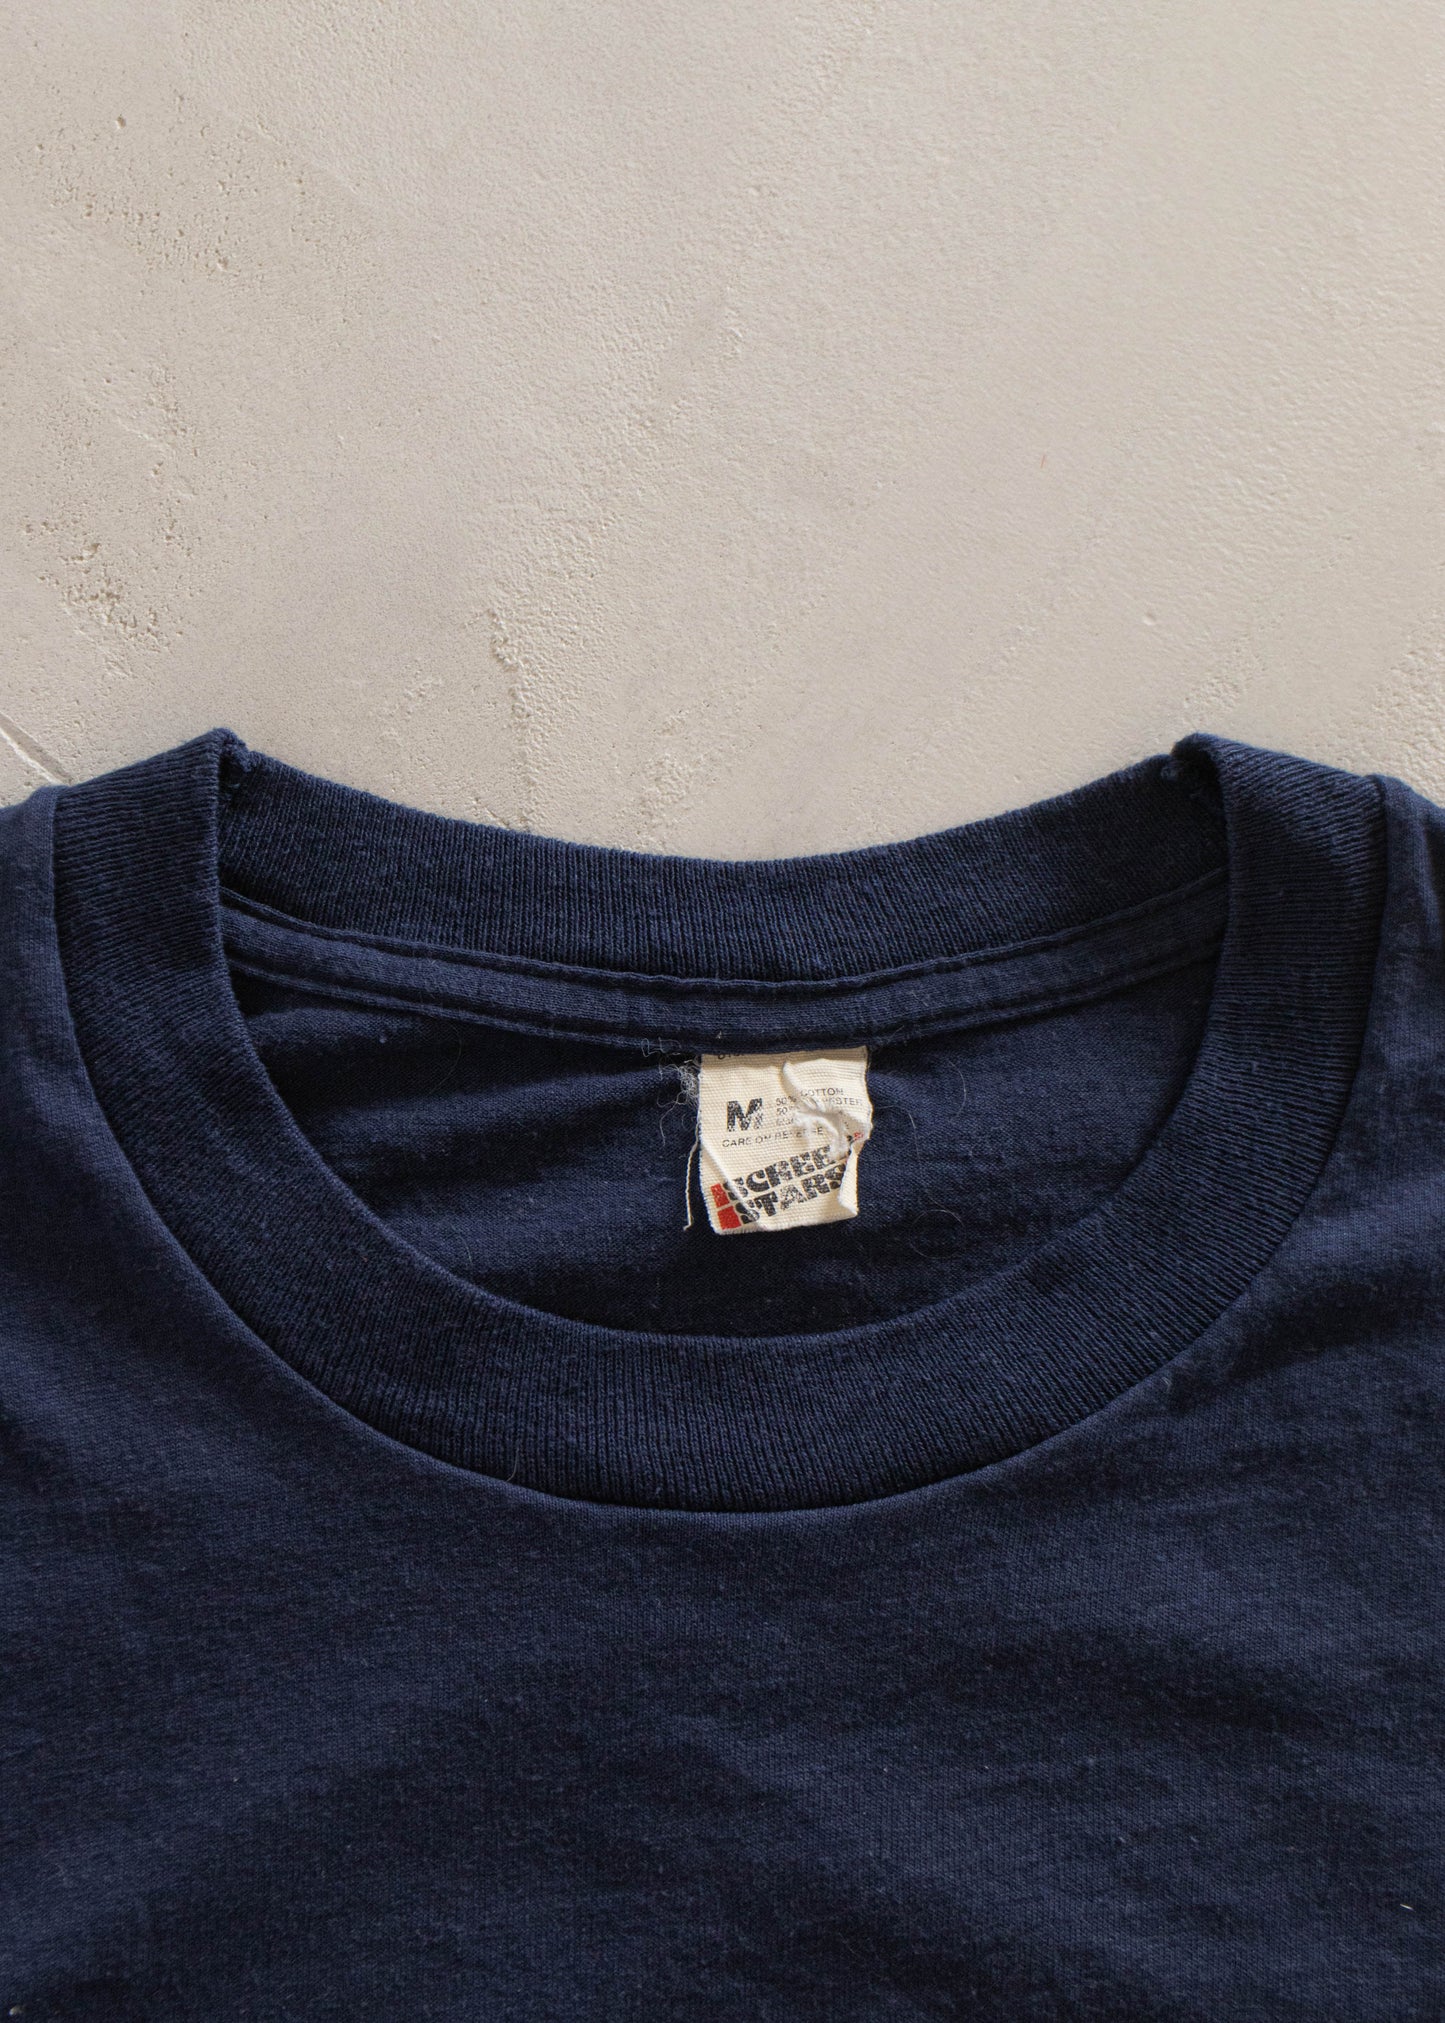 1988 Camel T-Shirt Size S/M